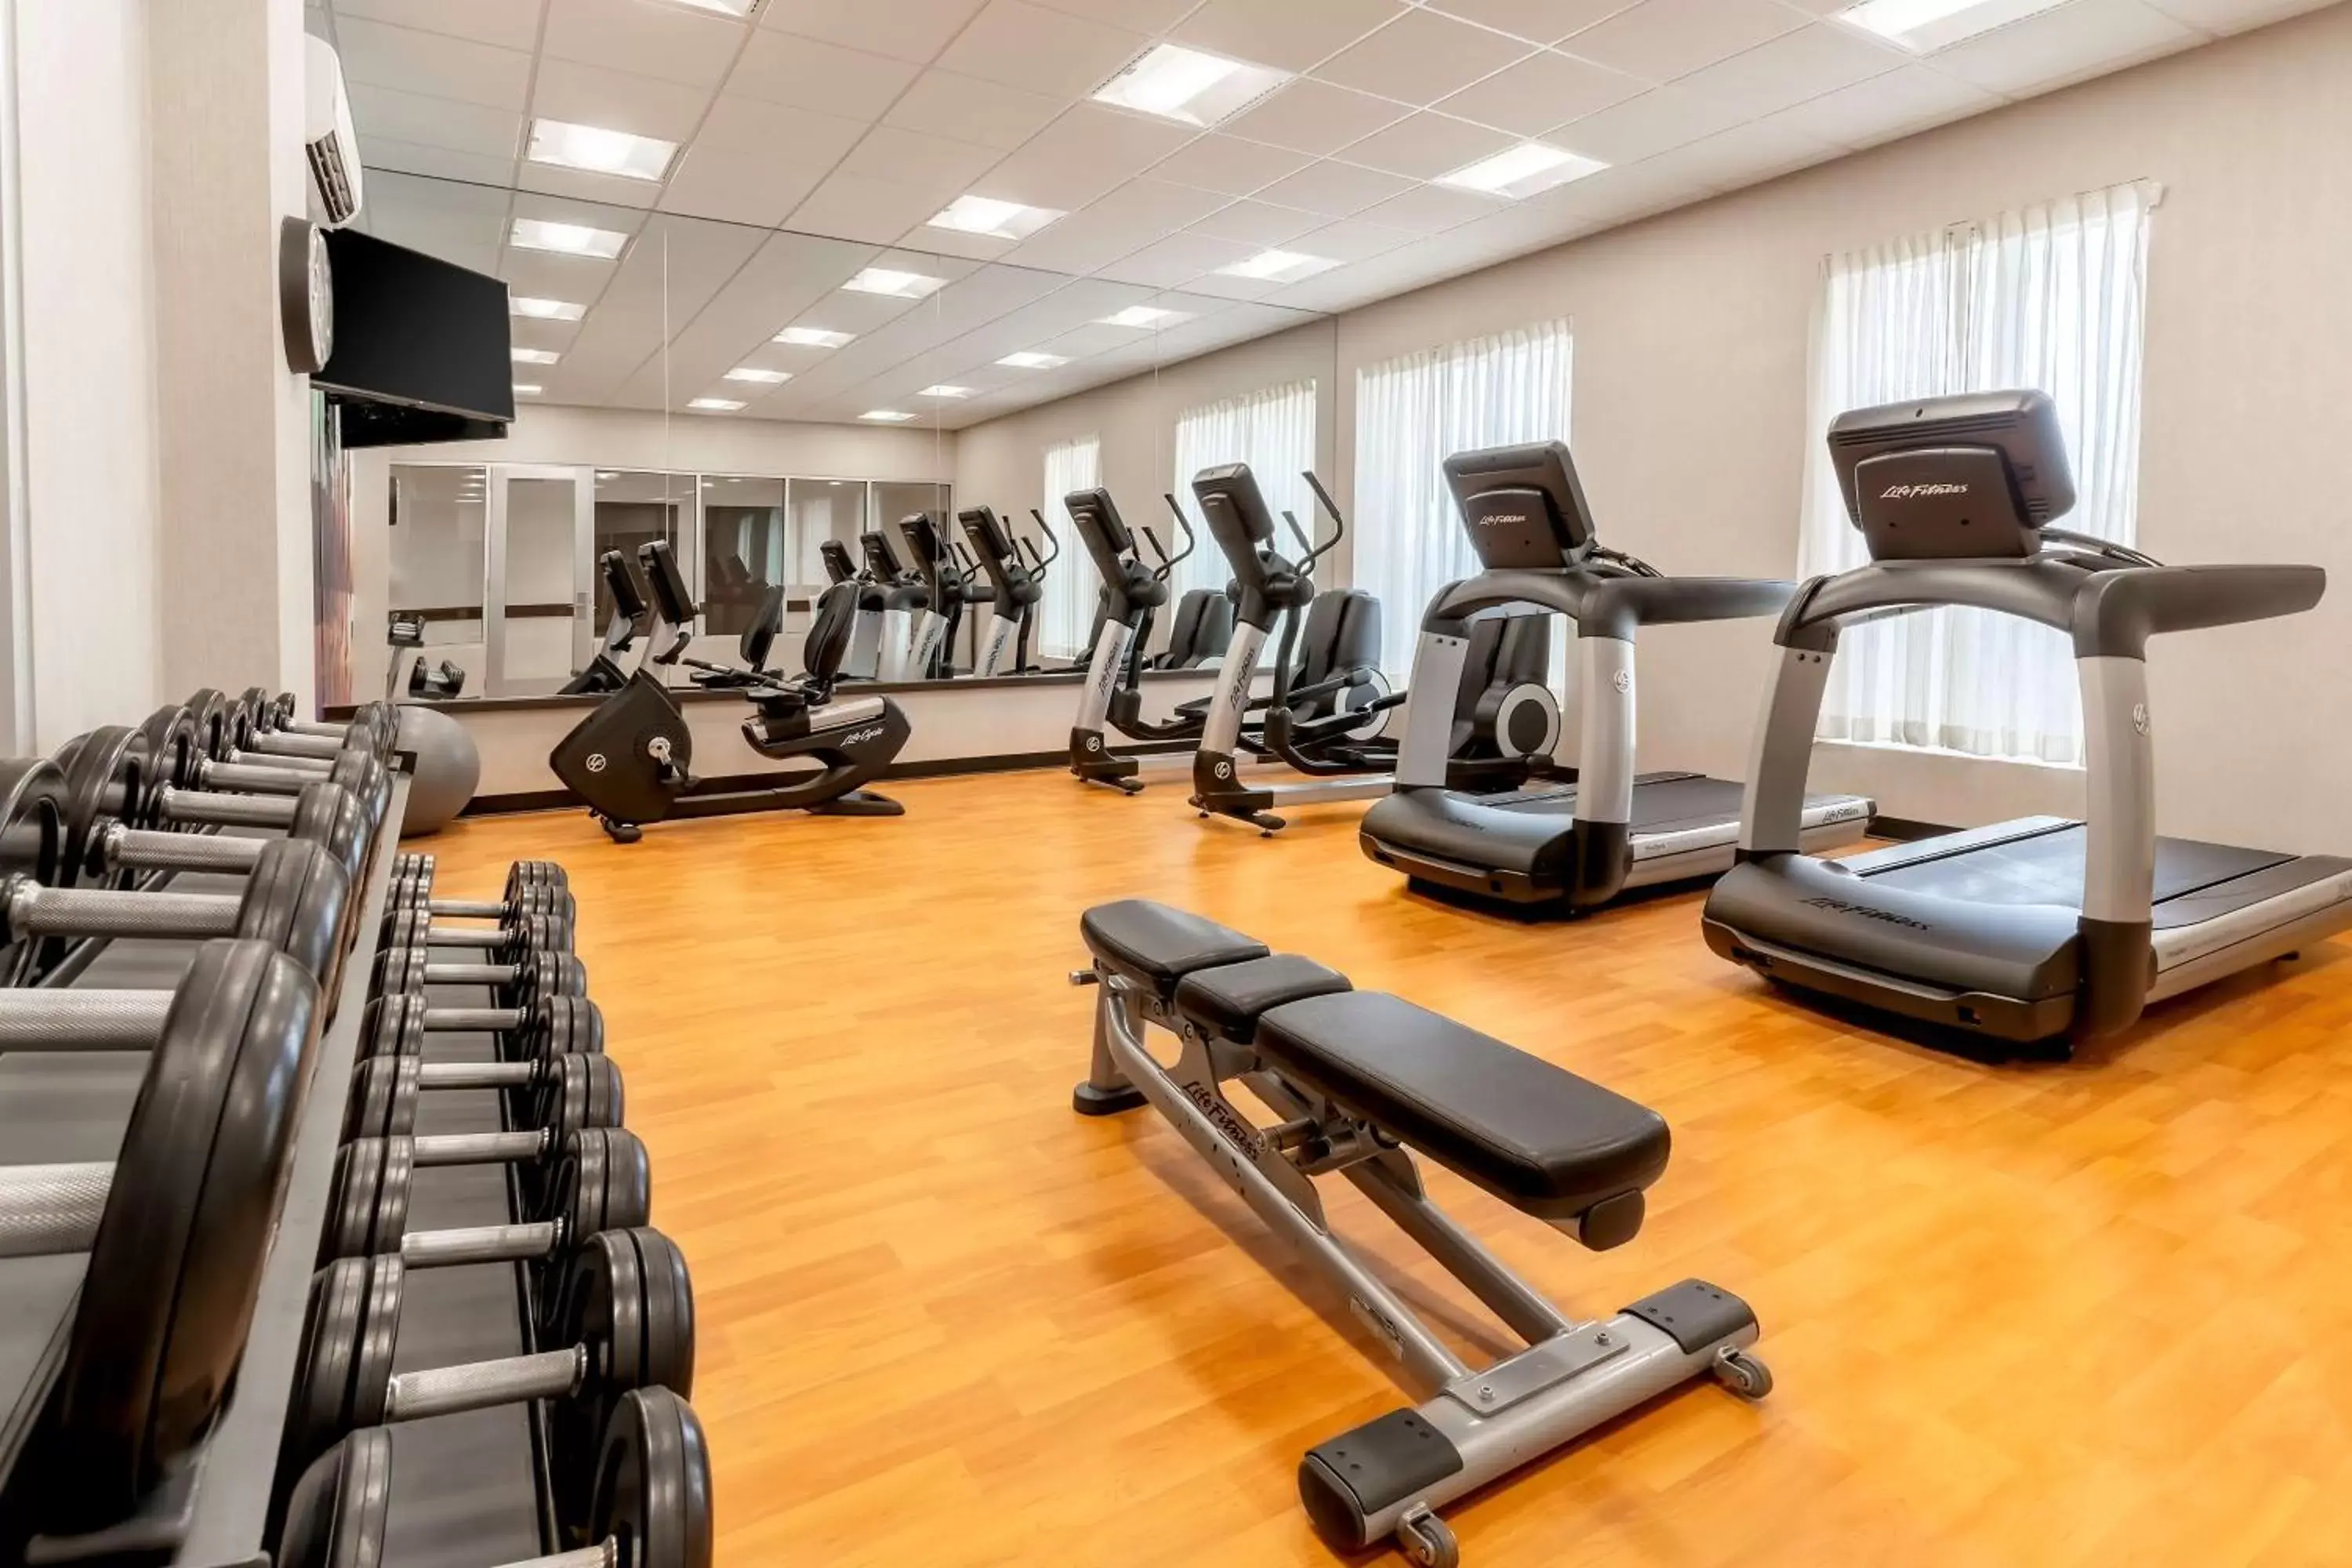 Fitness centre/facilities, Fitness Center/Facilities in Hyatt Place Salt Lake City Airport